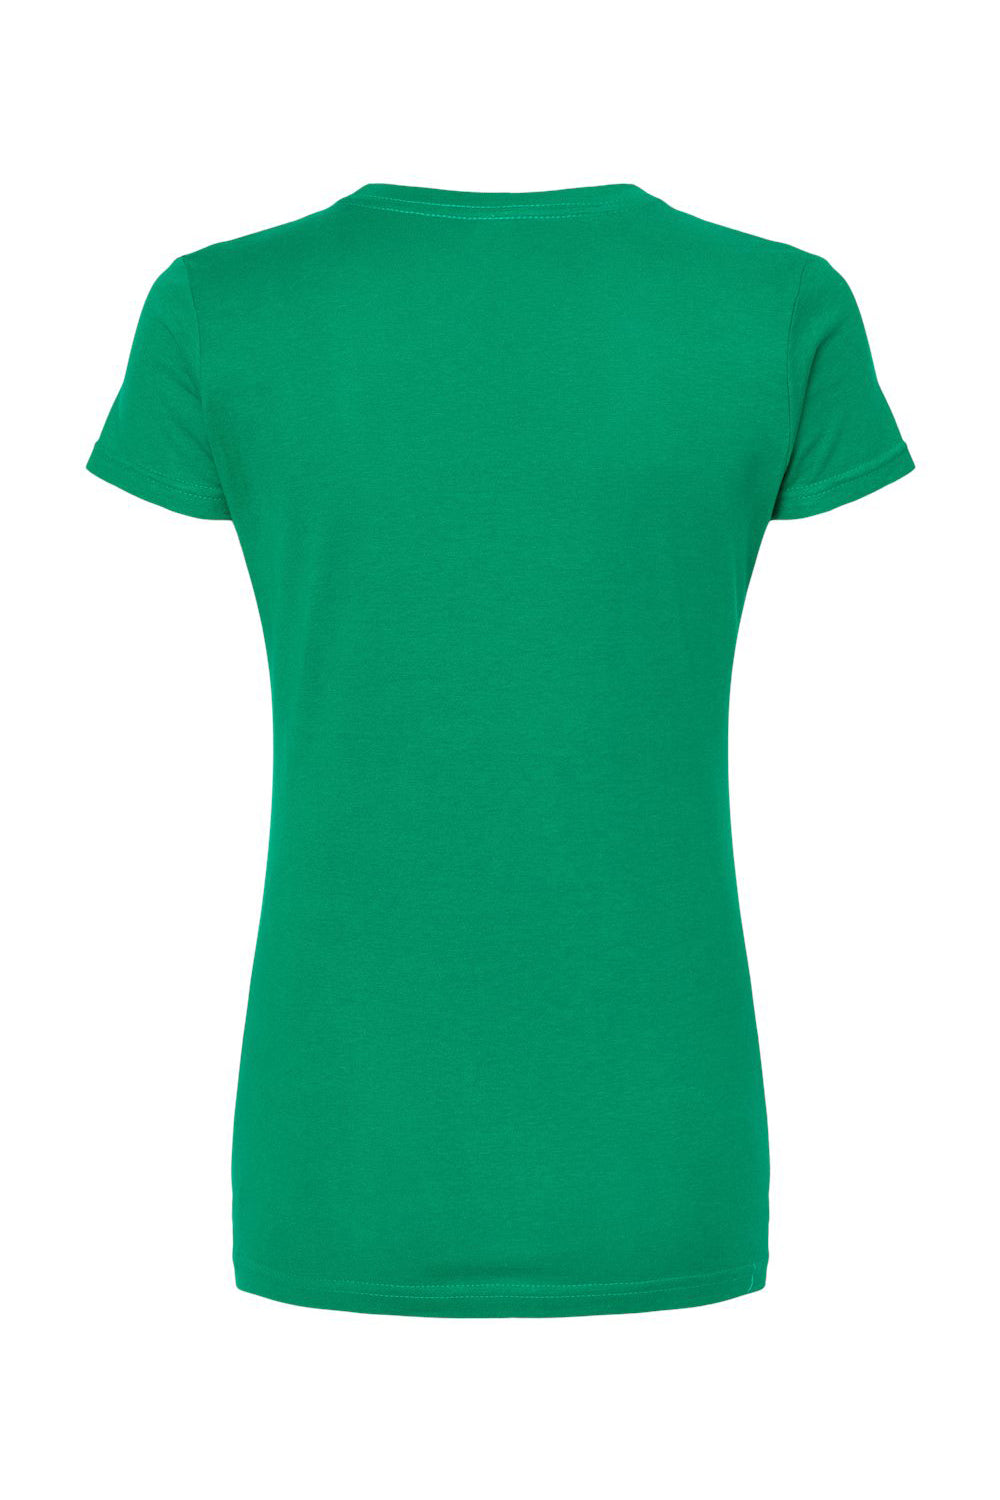 Tultex 213 Womens Fine Jersey Slim Fit Short Sleeve Crewneck T-Shirt Kelly Green Flat Back